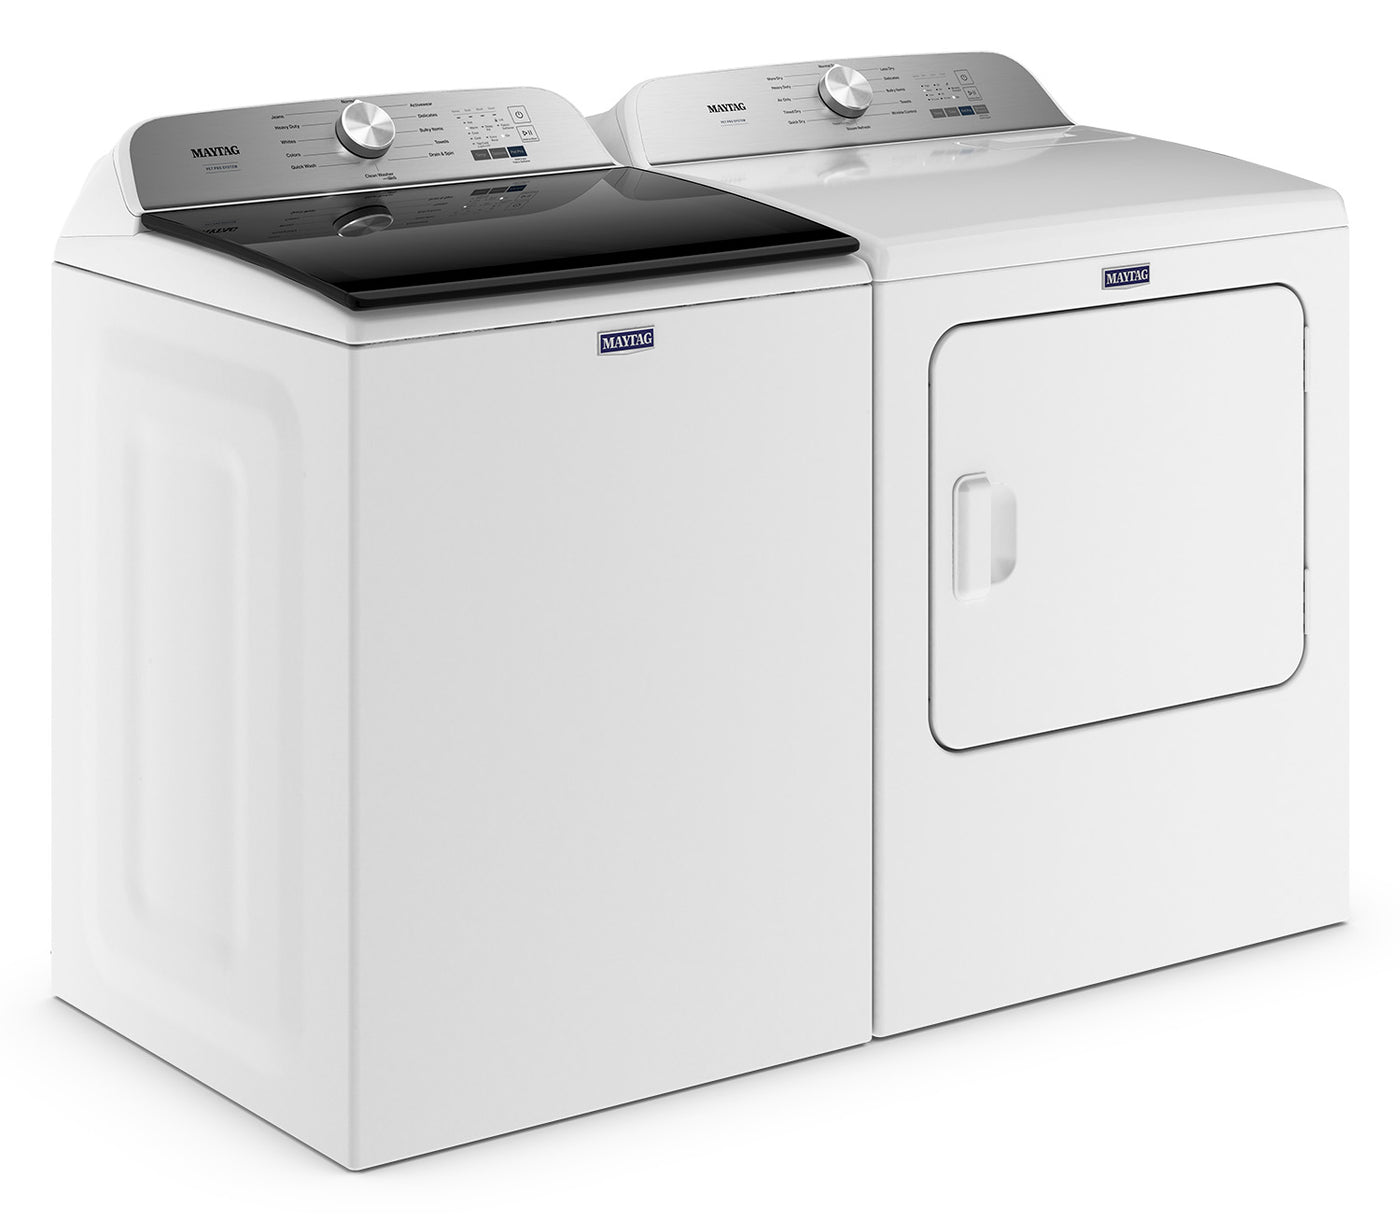 Maytag White Top-Load Washer (5.4 cu. ft.) & Gas Dryer (7.0 cu. ft.) - MVW6500MW/MGD6500MW